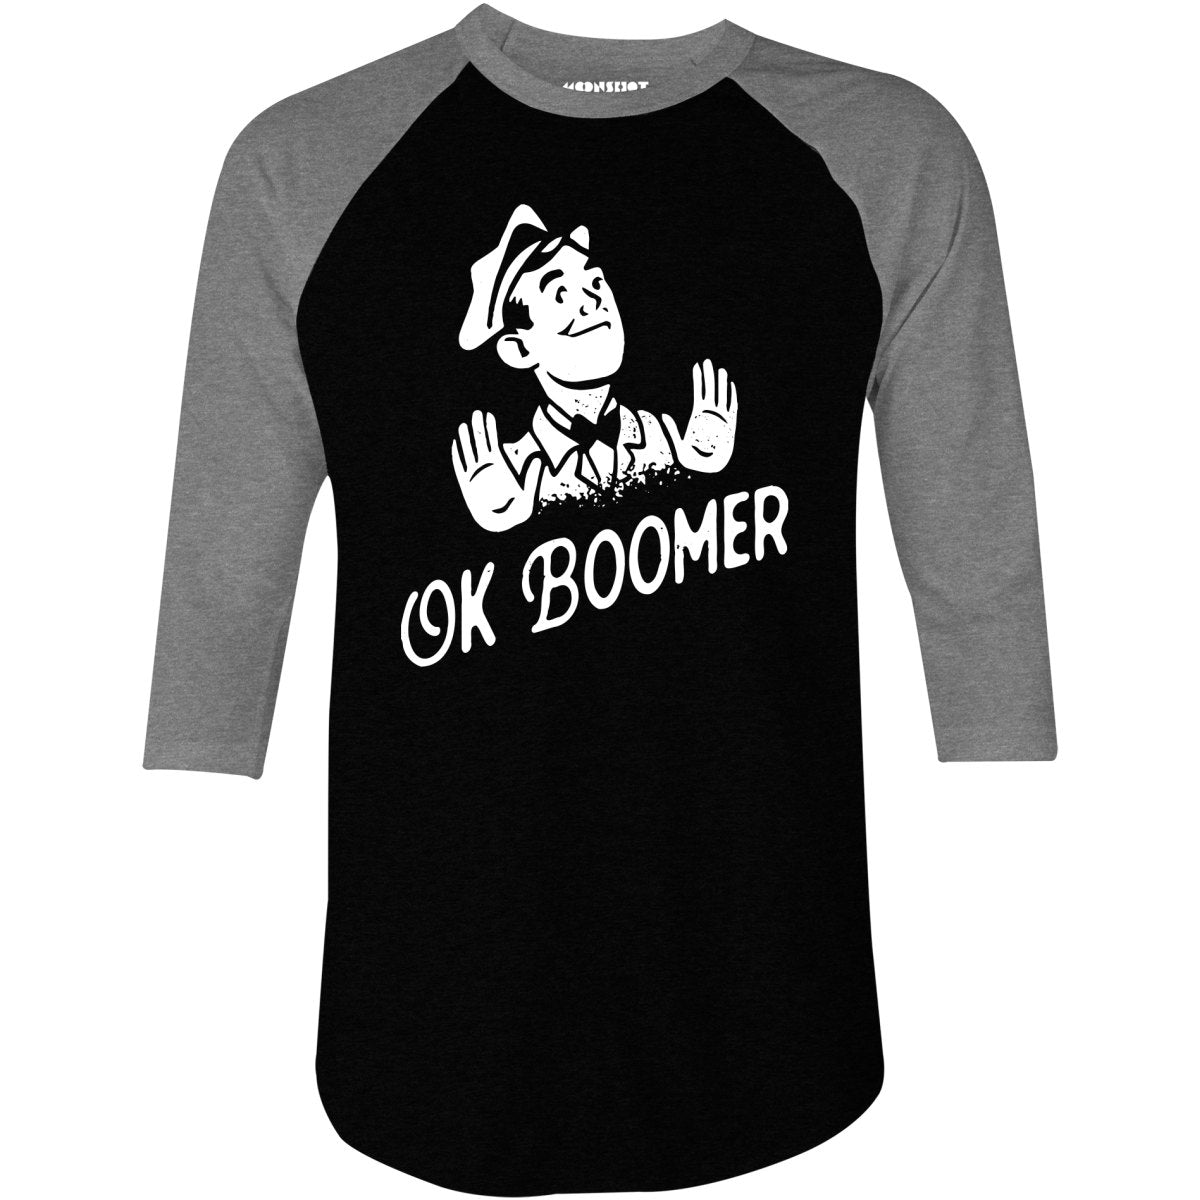 Ok Boomer - 3/4 Sleeve Raglan T-Shirt